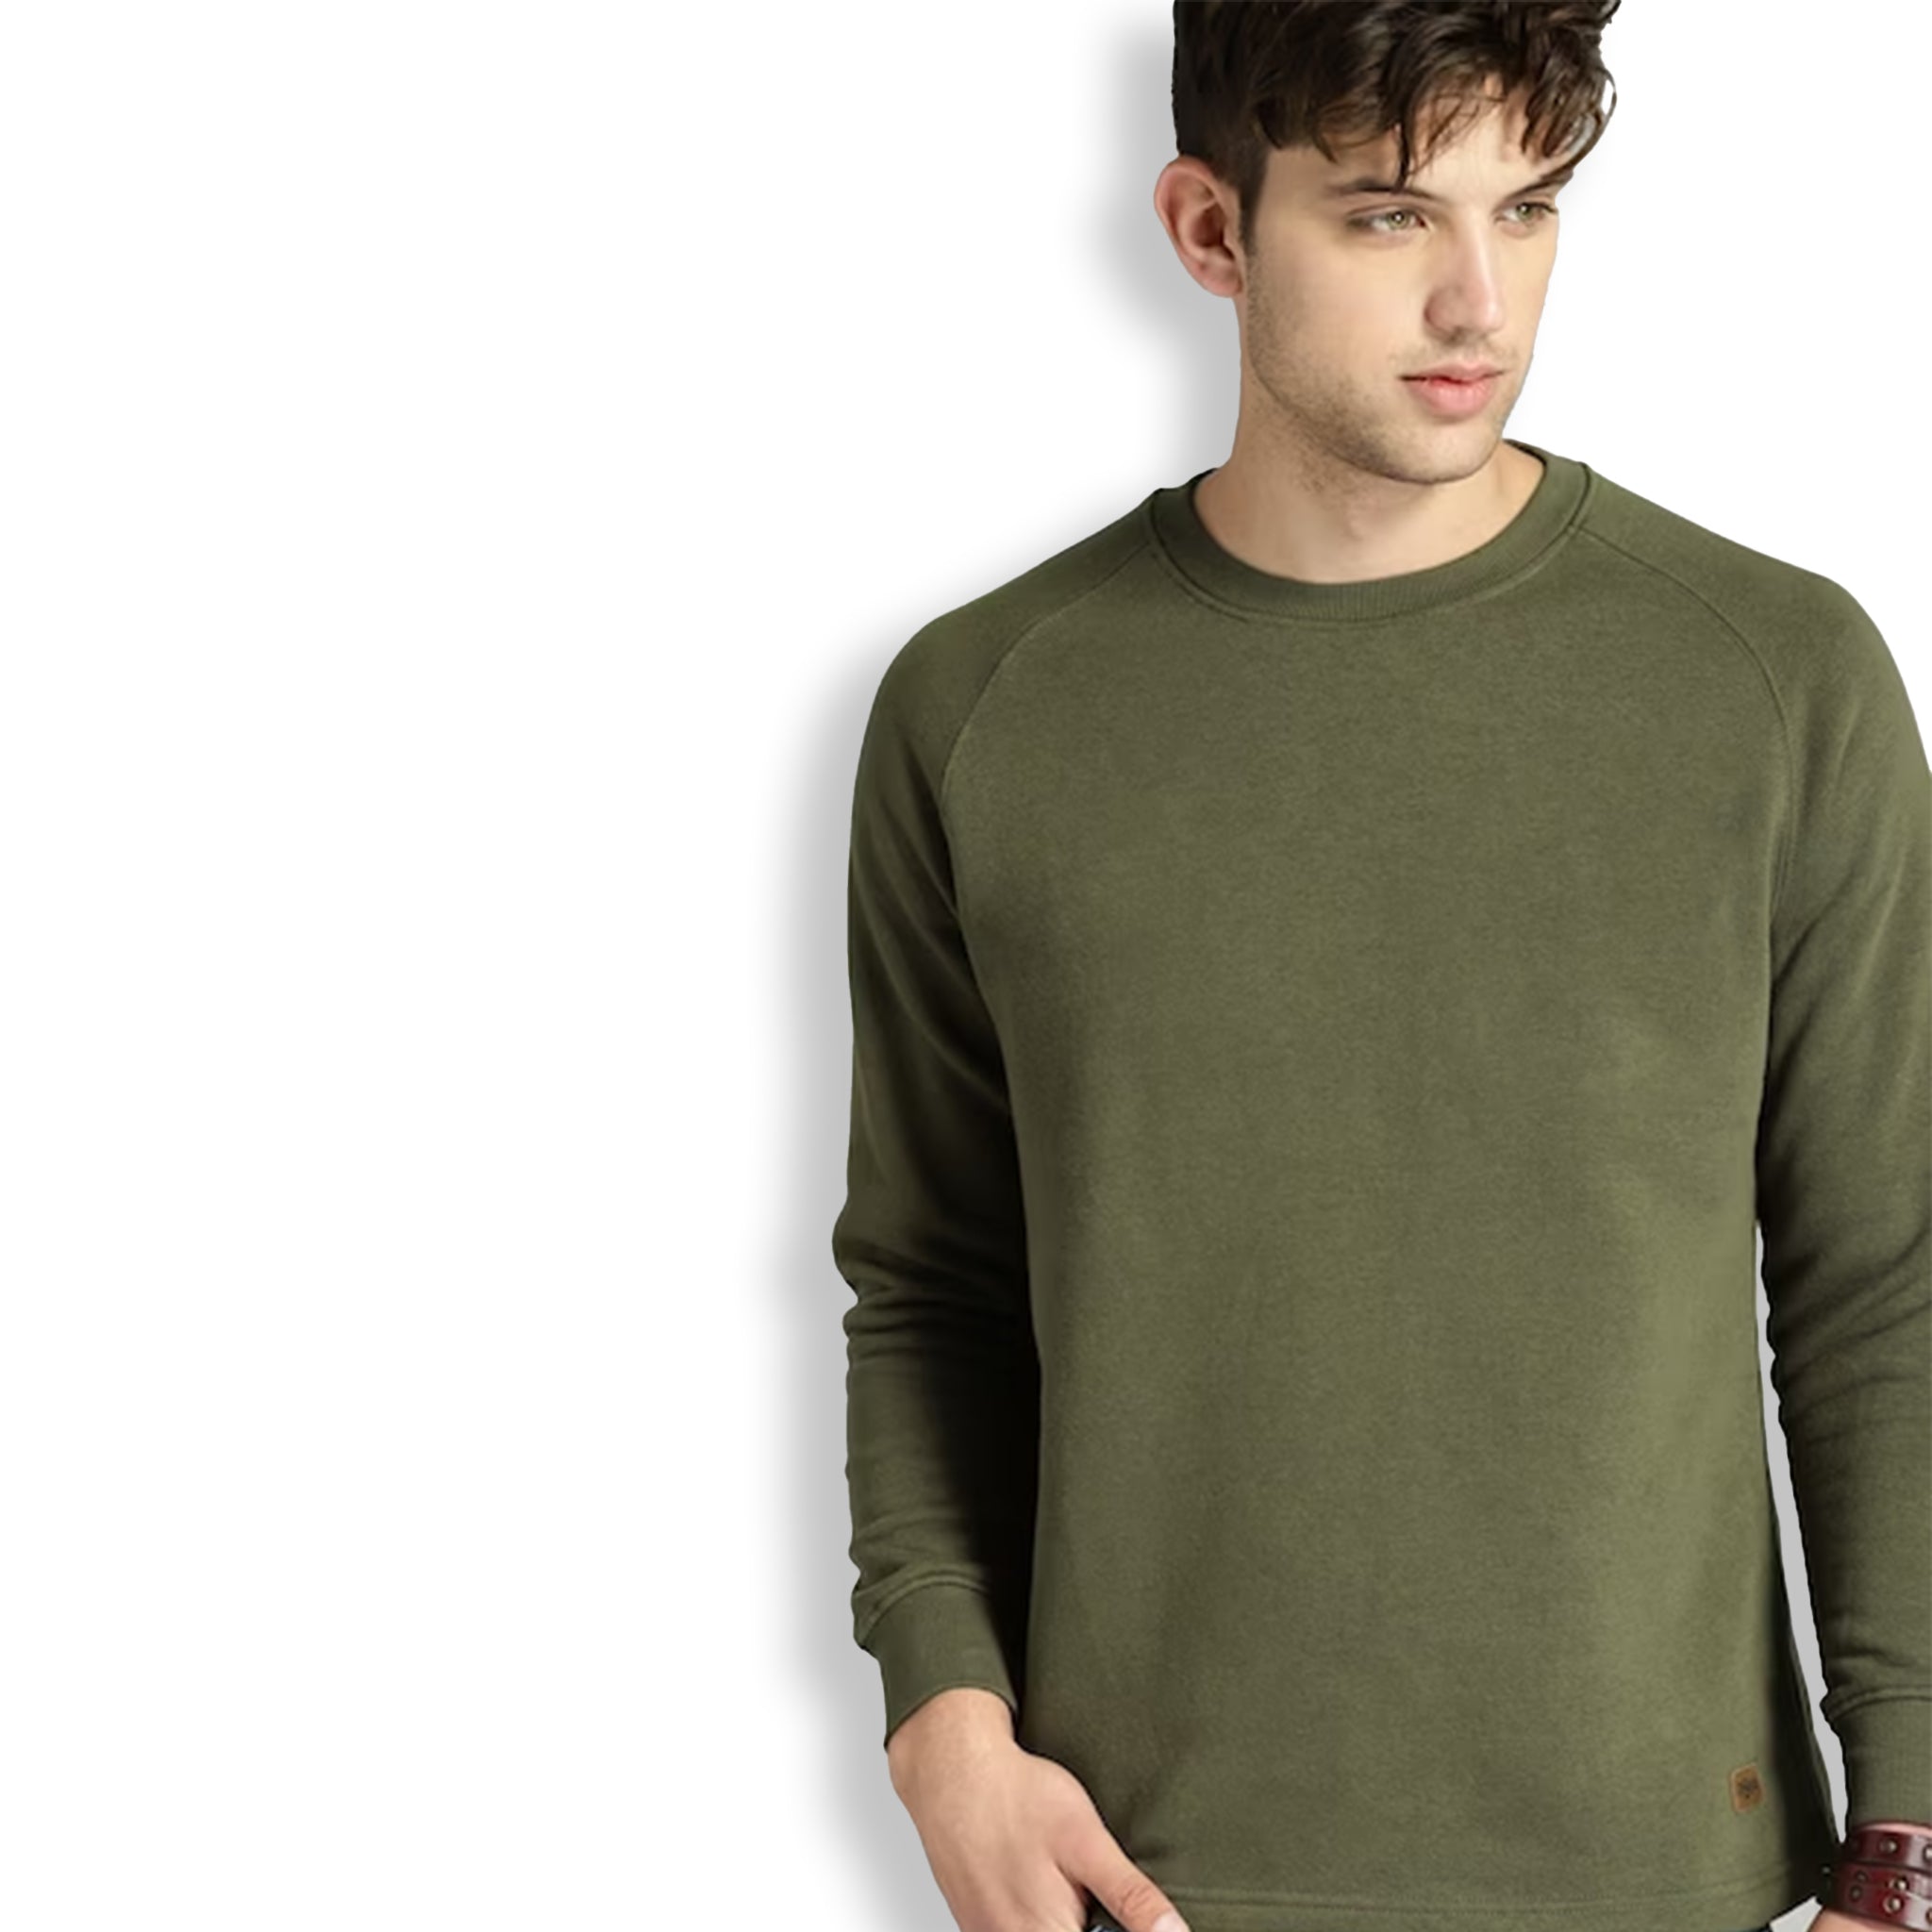 Bizzar's Olive Green Sweatshirt